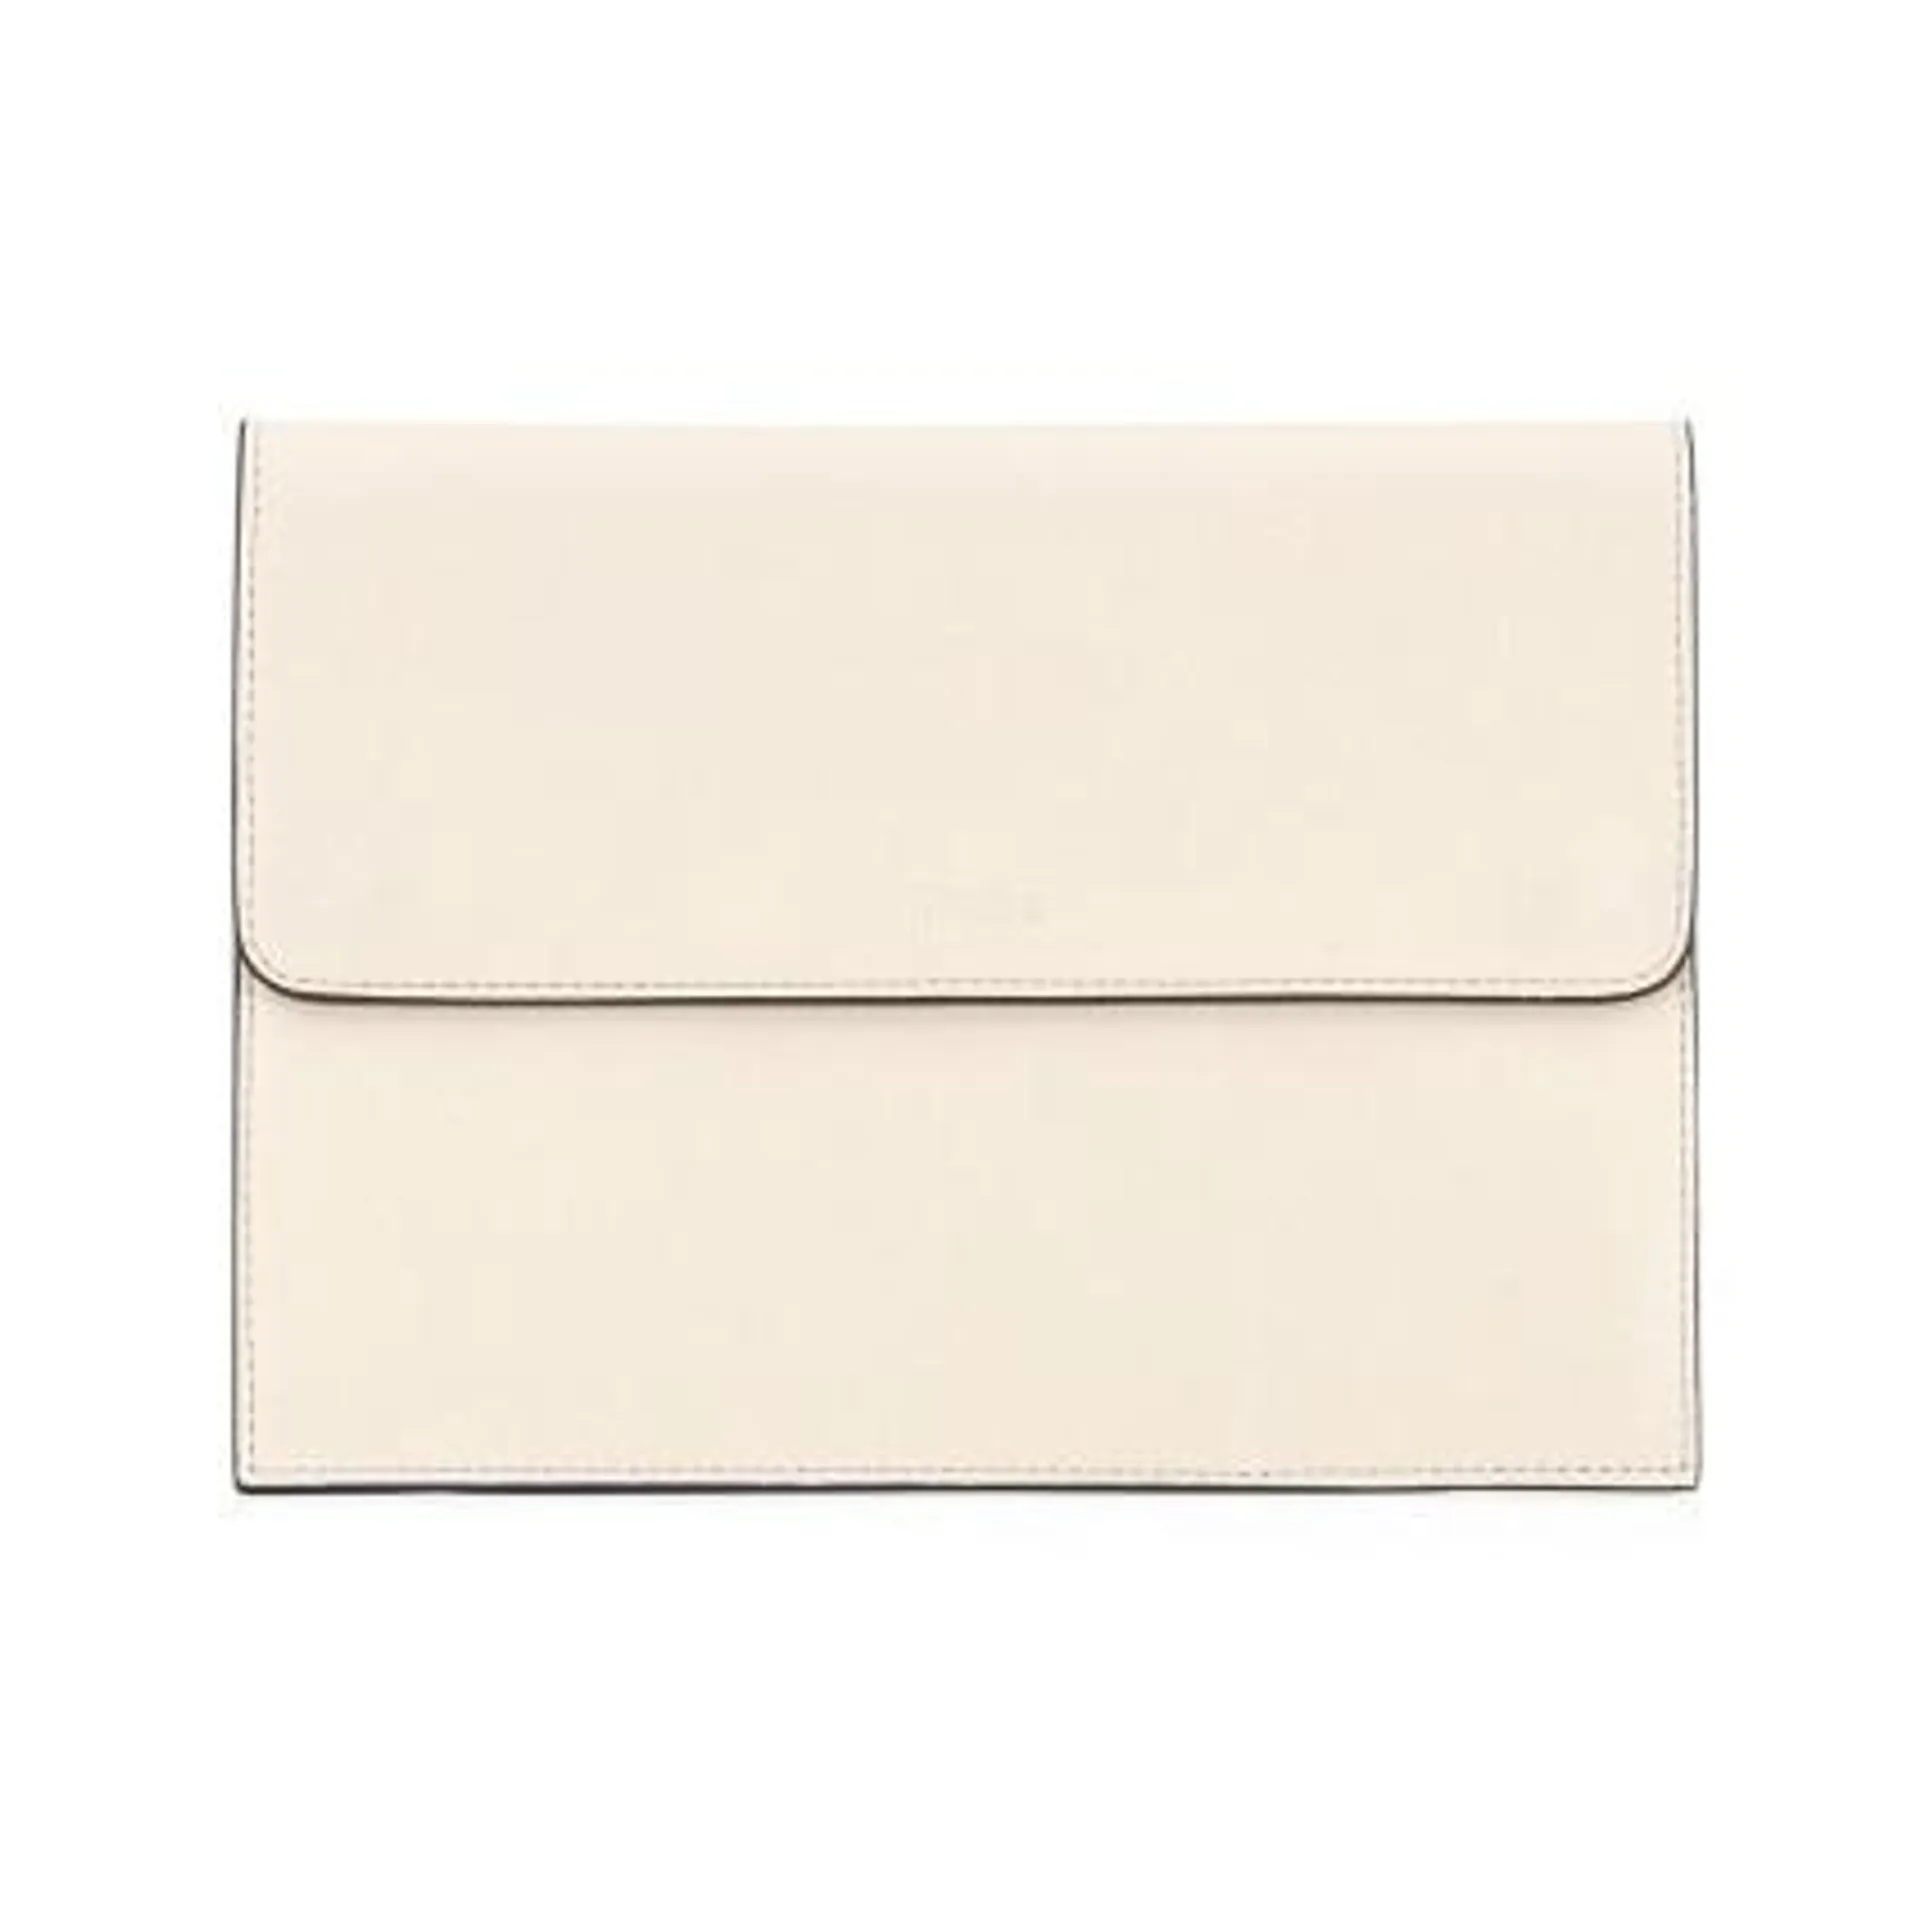 Capa Envelope para iPad 11", Pampas, Originais iPlace, Creme